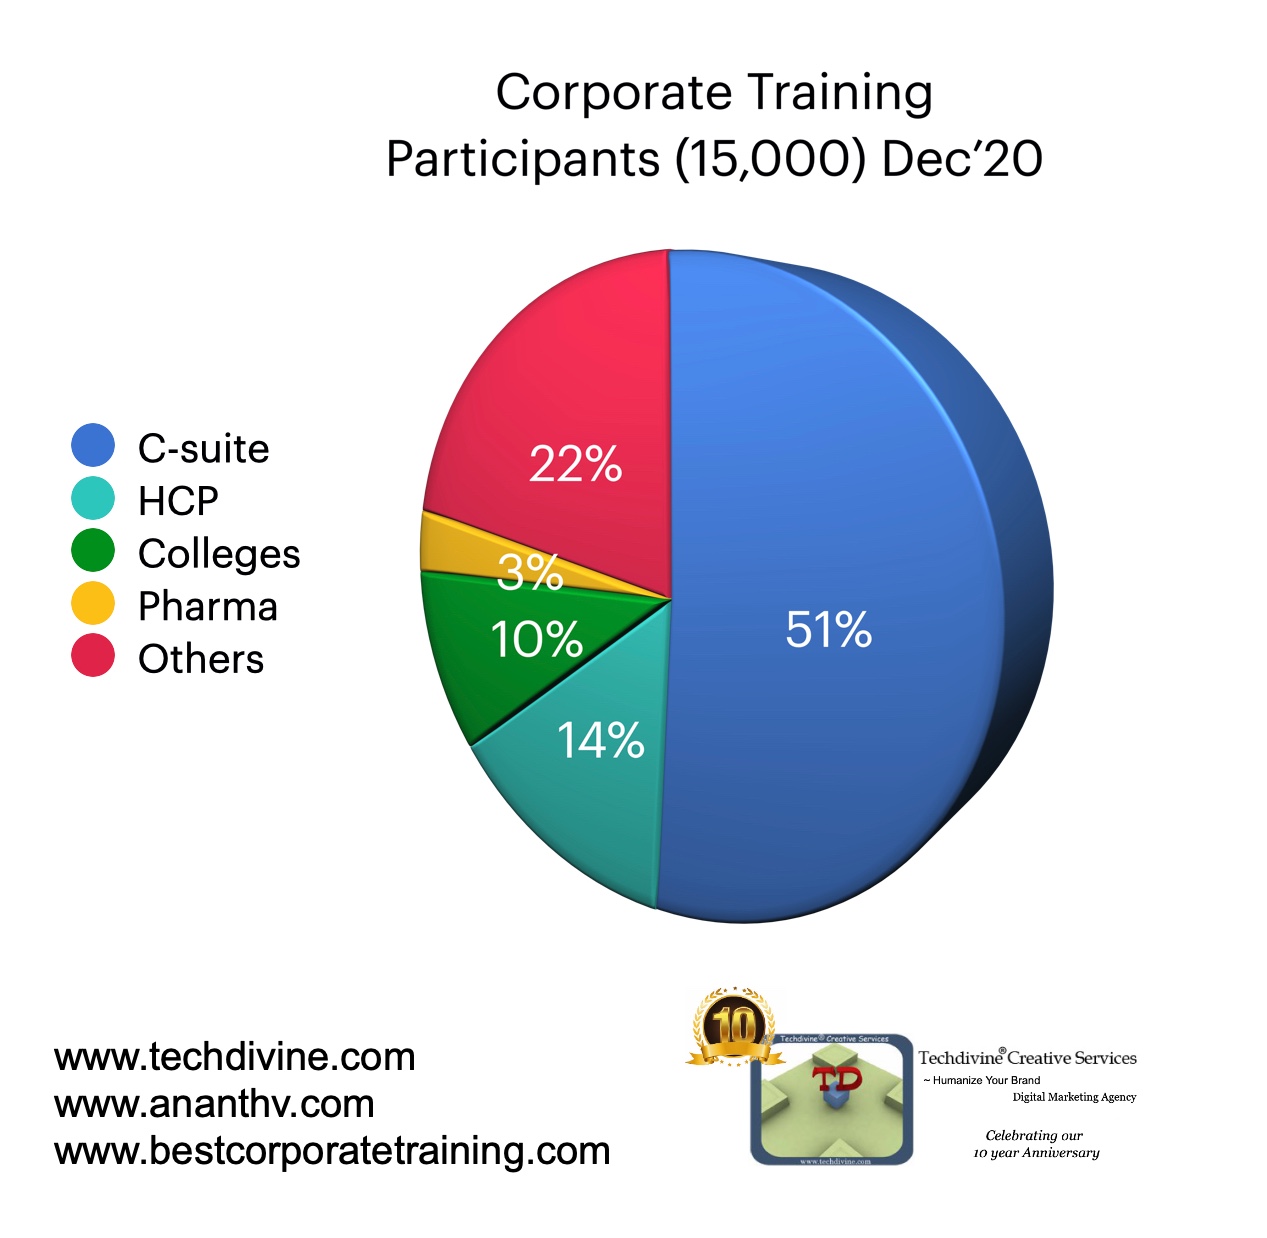 Corporate training milestone 15,000 participants 